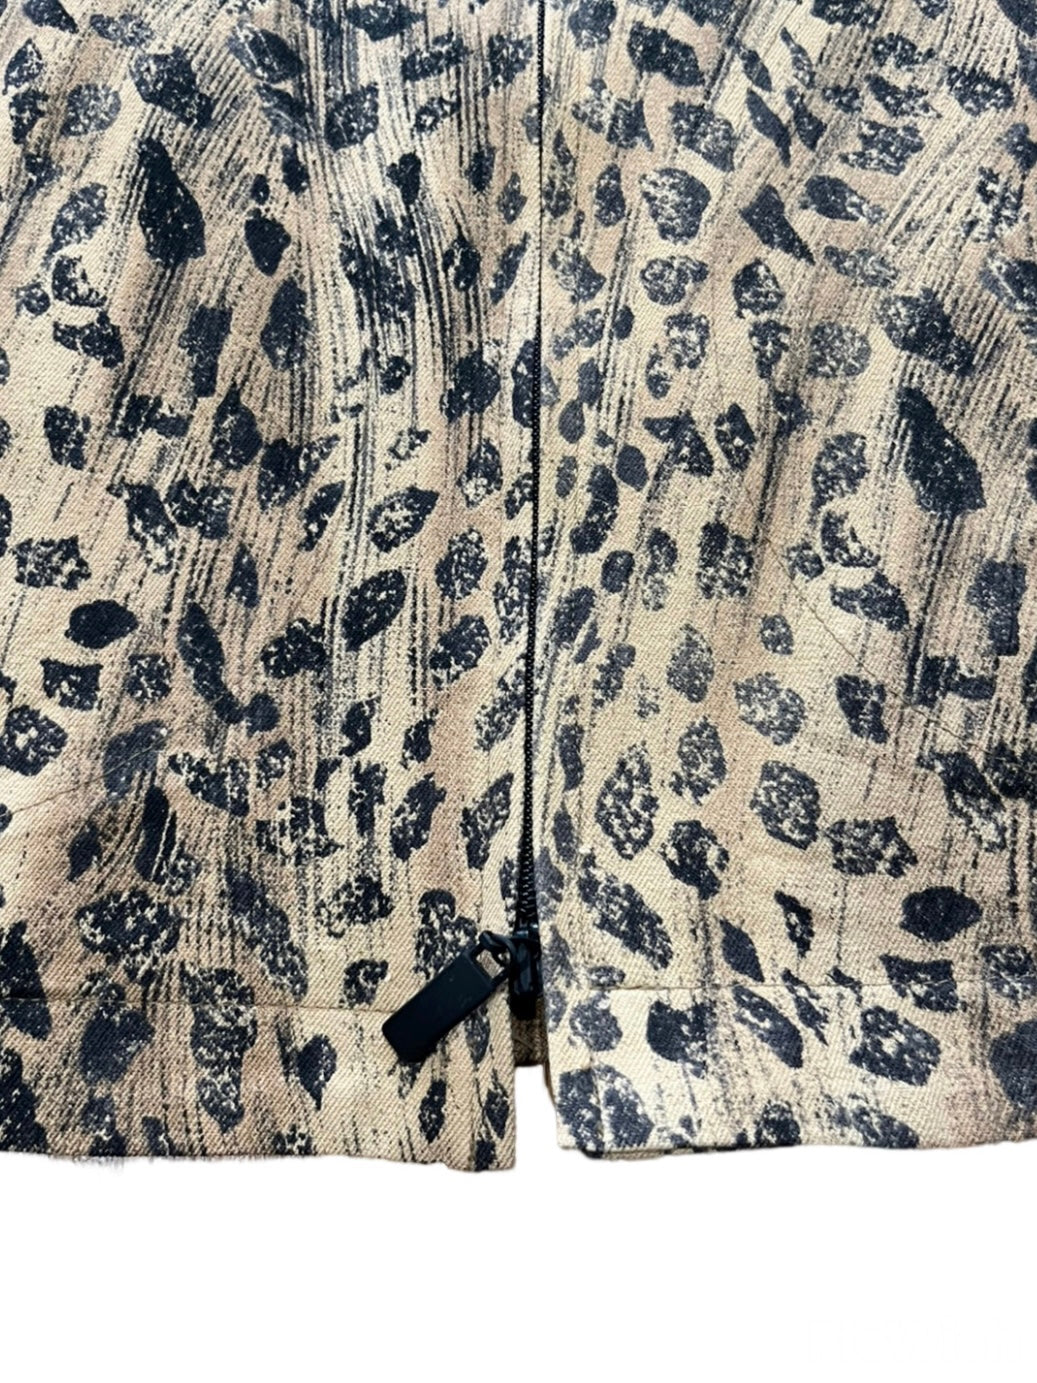 total pattern zipup design jacket